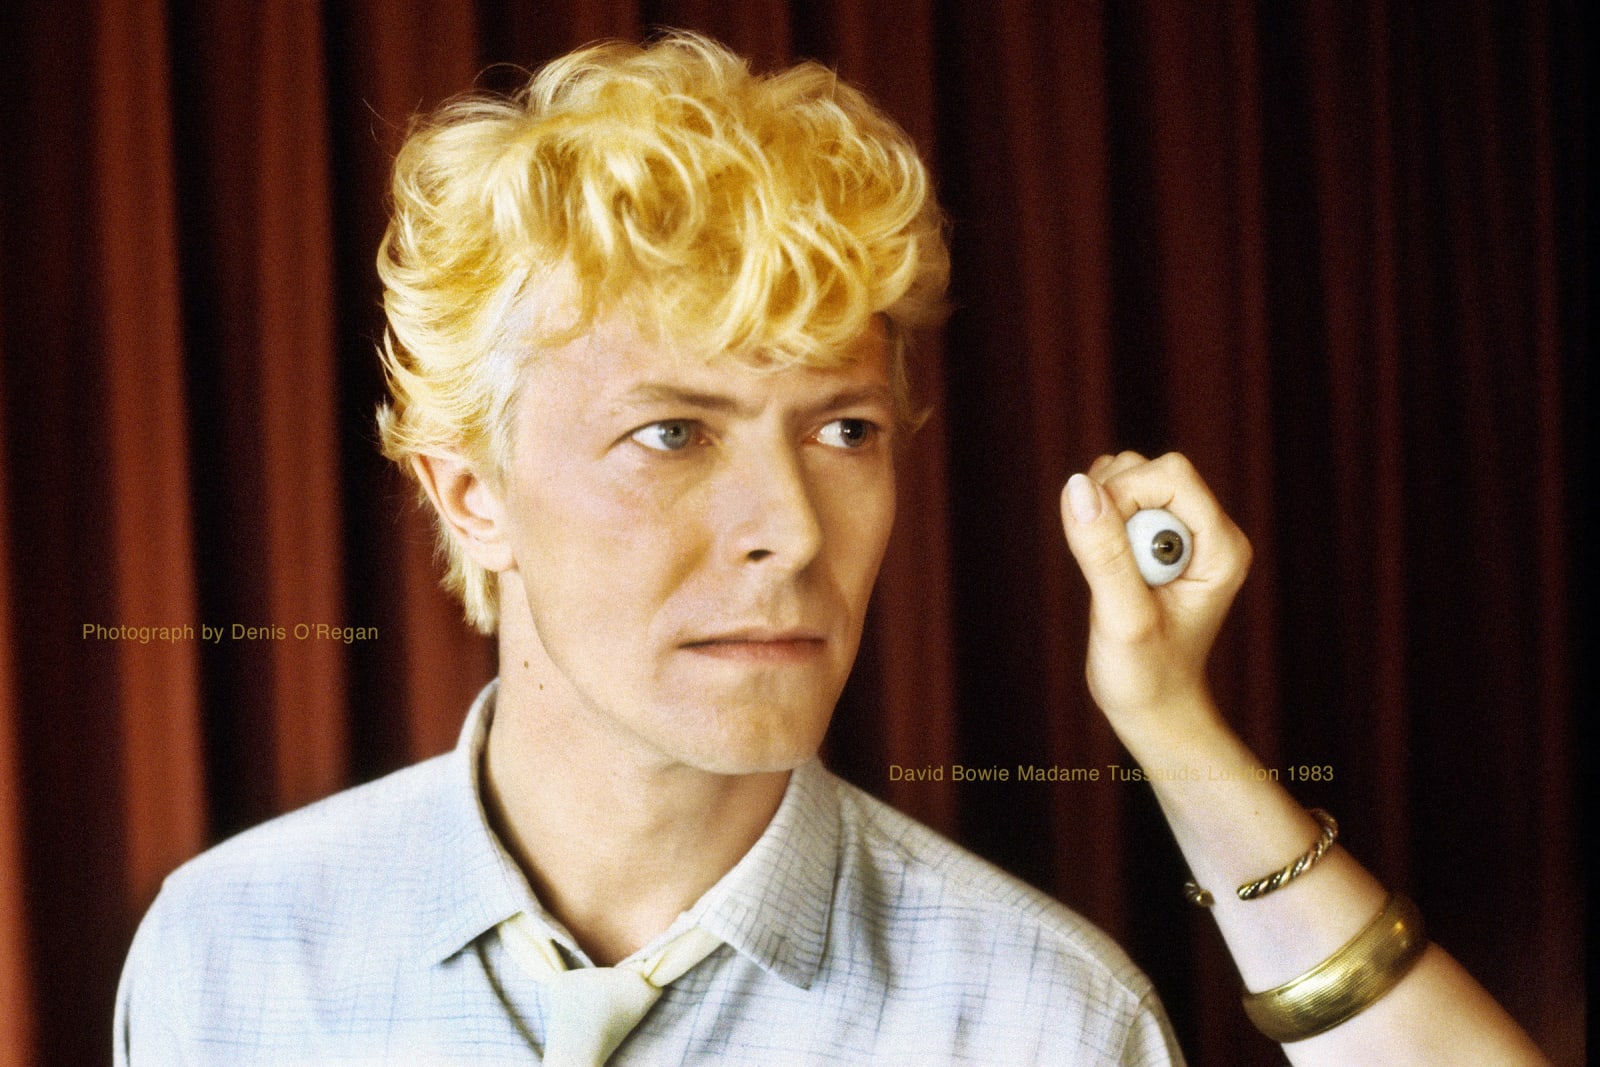 DAVID BOWIE, David Bowie Madame Tussaud's, 1983